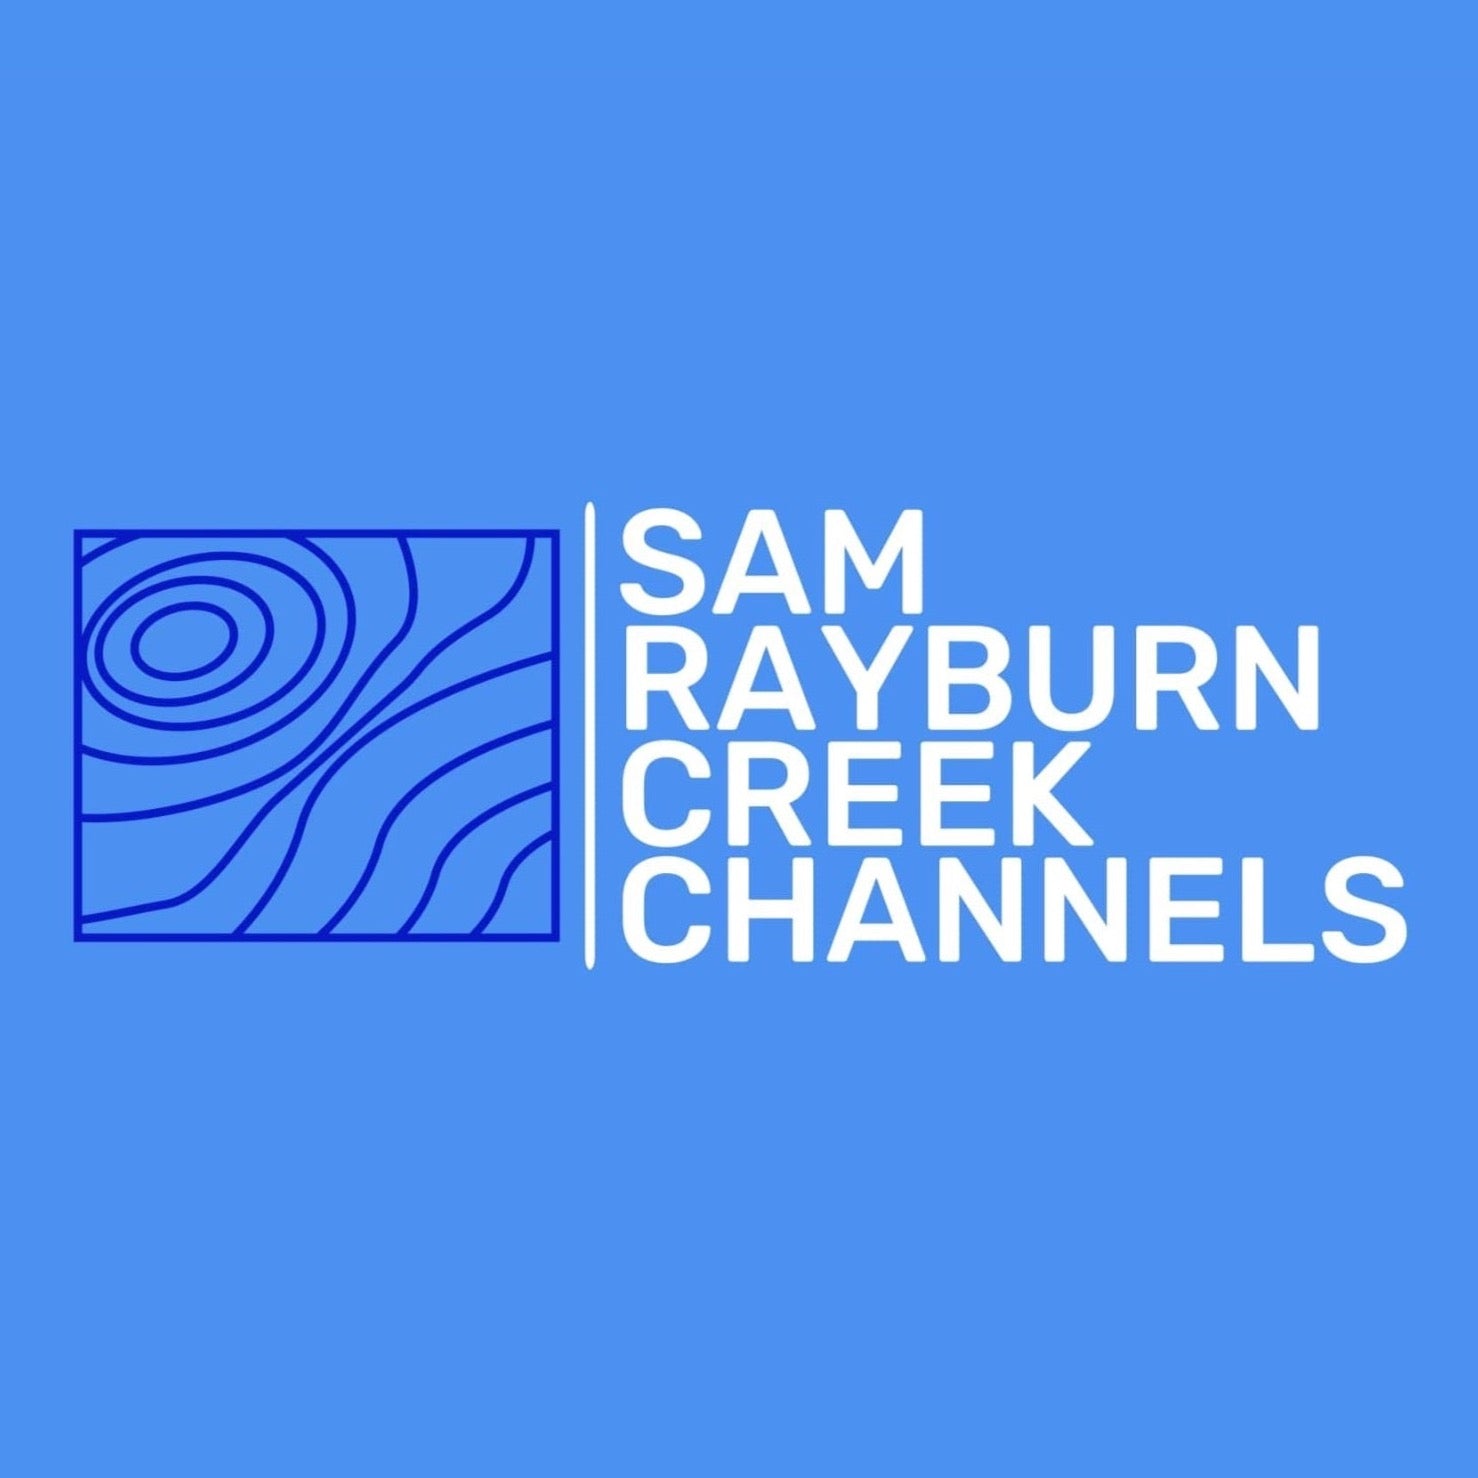 Sam Rayburn Creek Channels